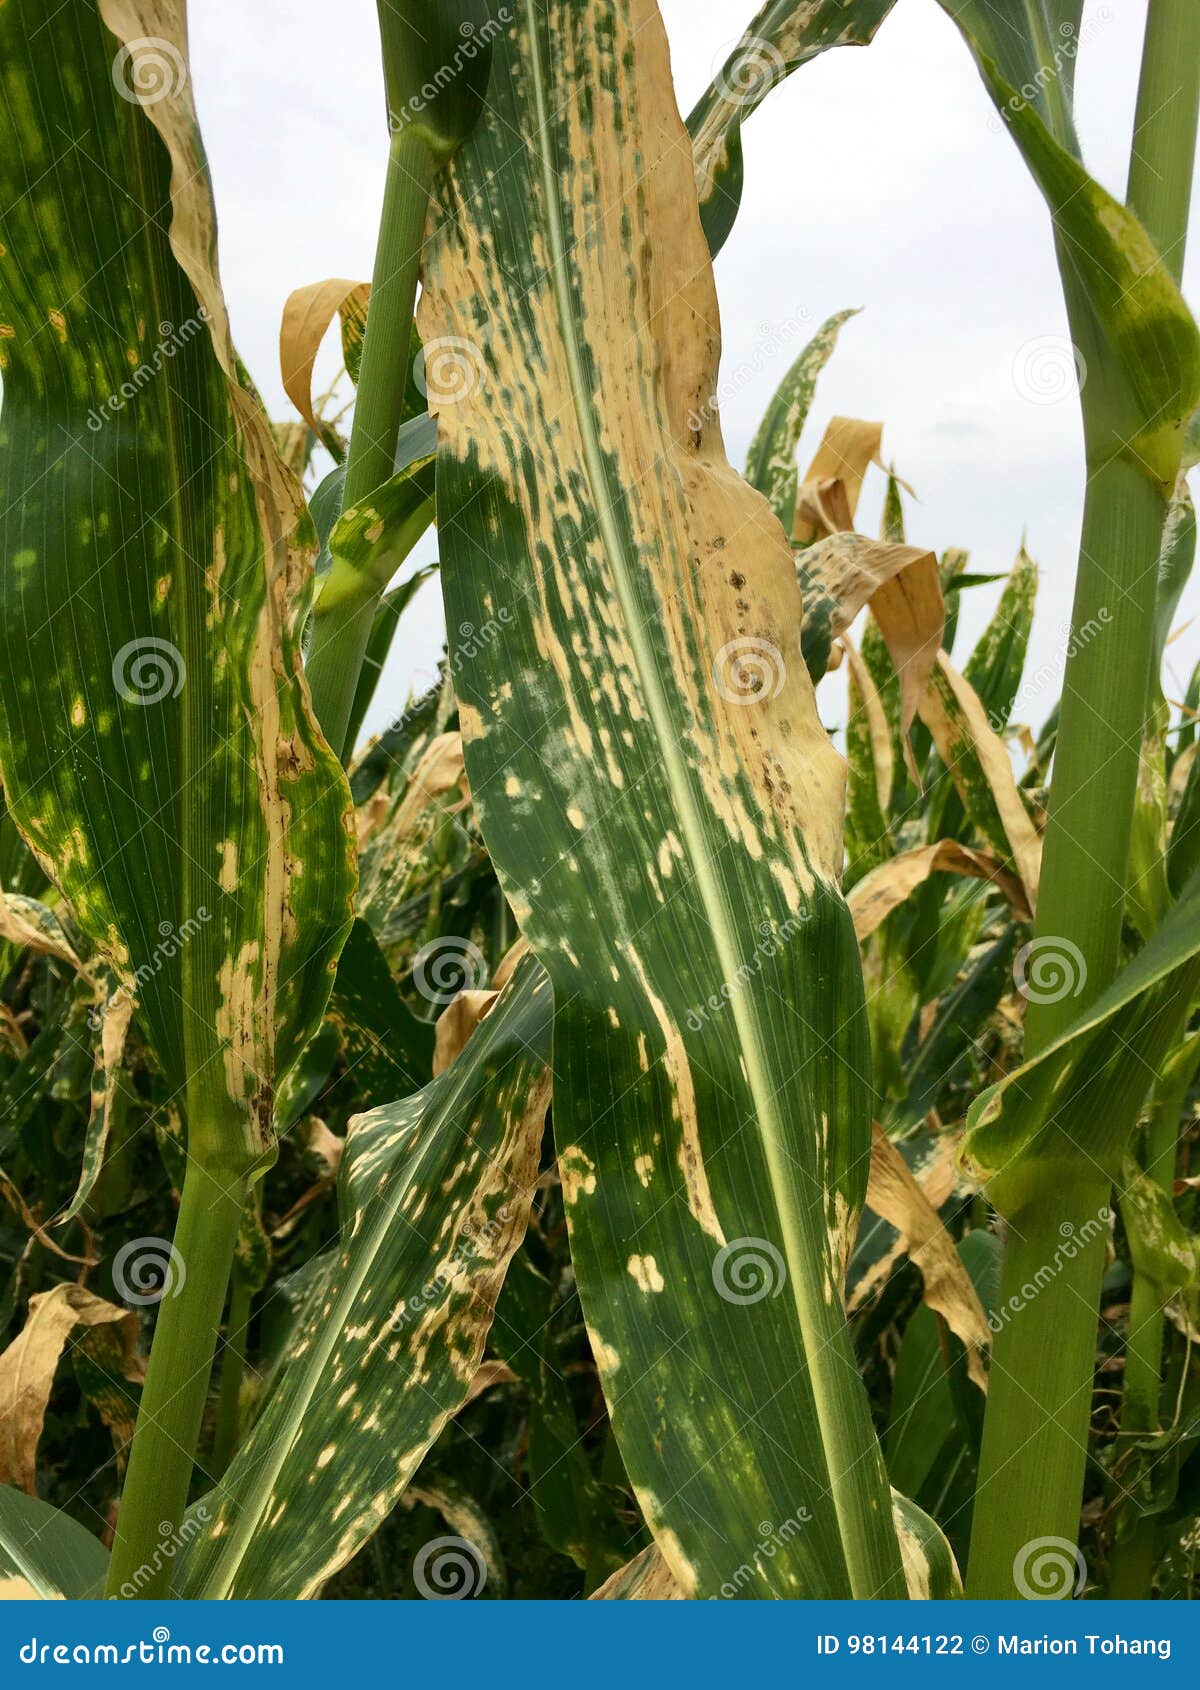 Helminthosporium turcicum kukorica. A szántóföldi növények betegségei - Helminthosporium turcicum